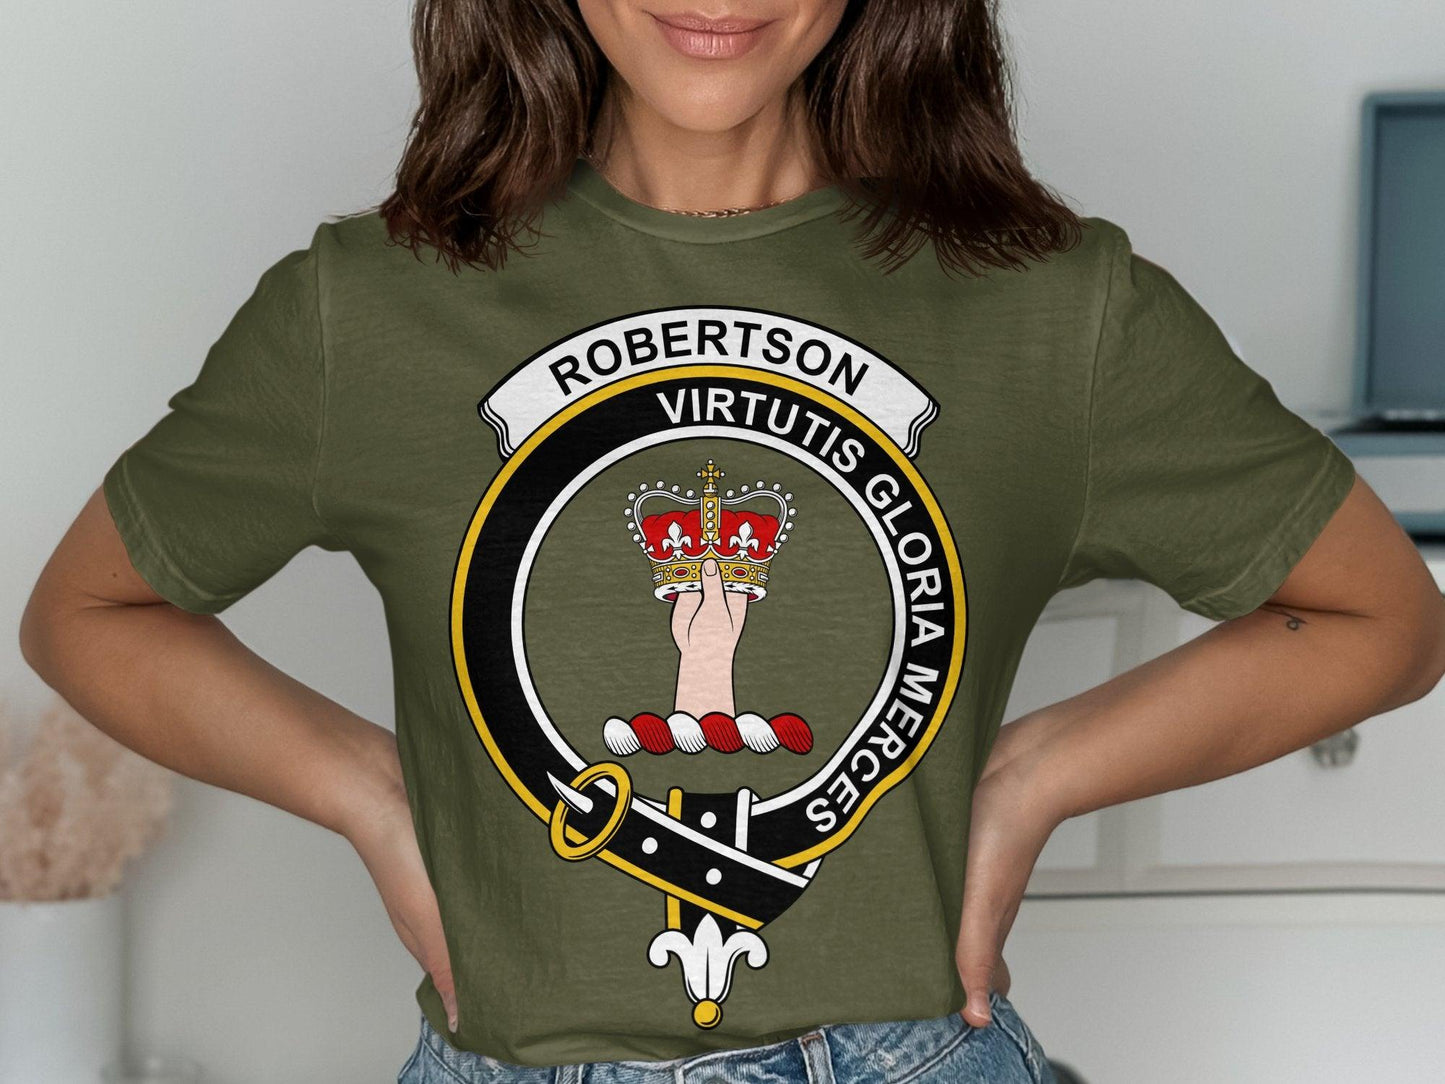 Robertson Virtutis Gloria Merces Clan Crest T-Shirt - Living Stone Gifts